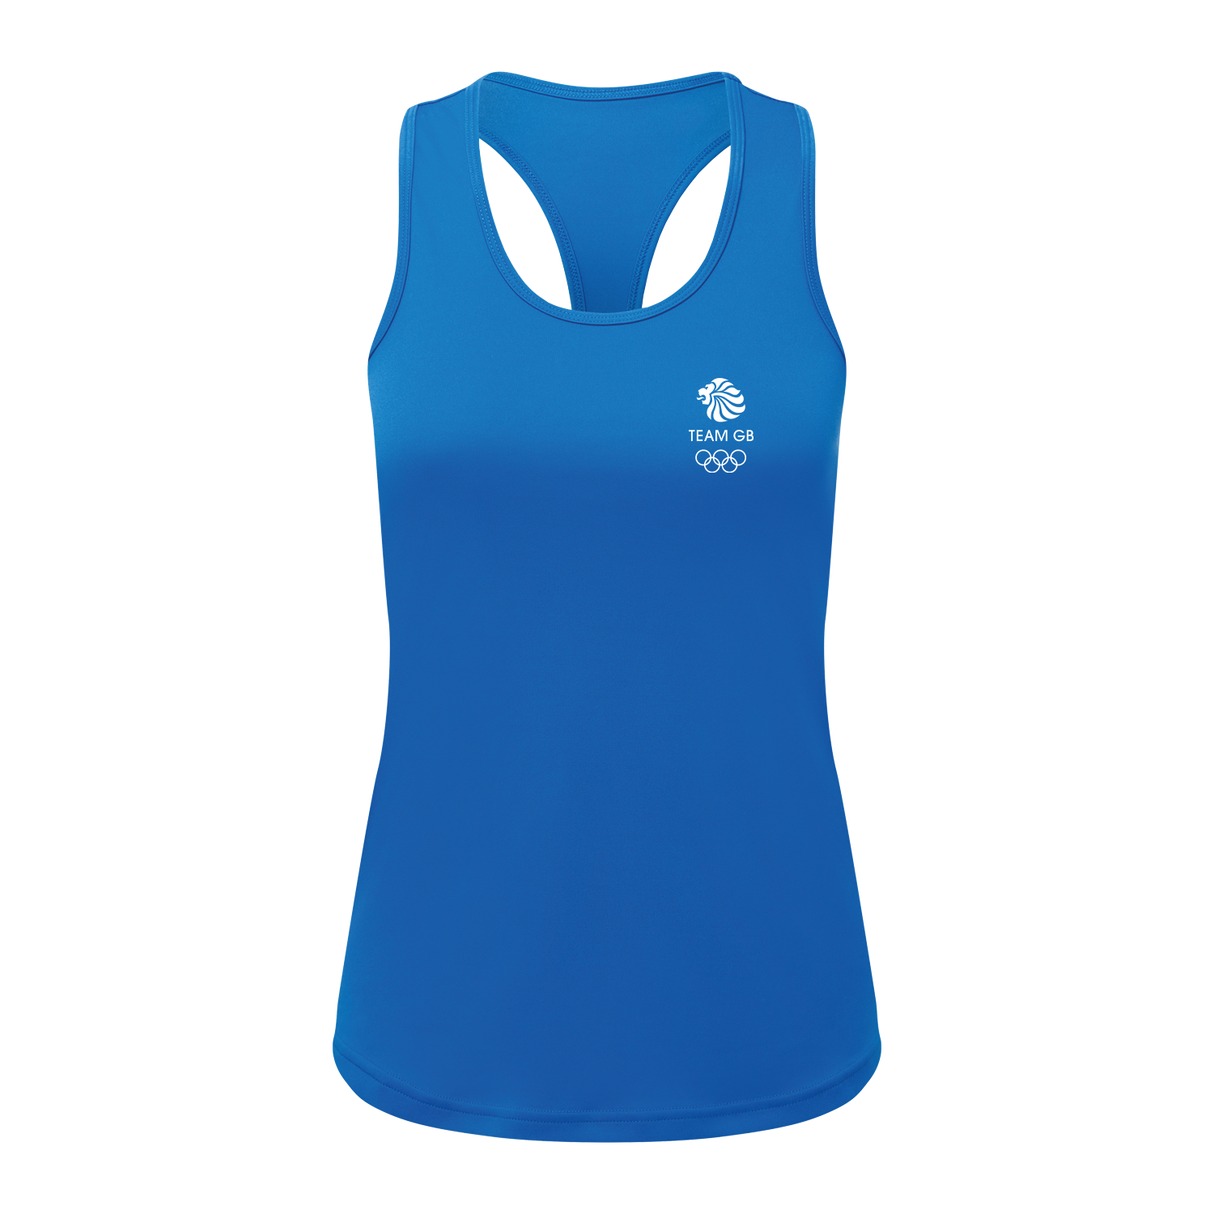 Team GB Active Women's Blue Racerback Vest